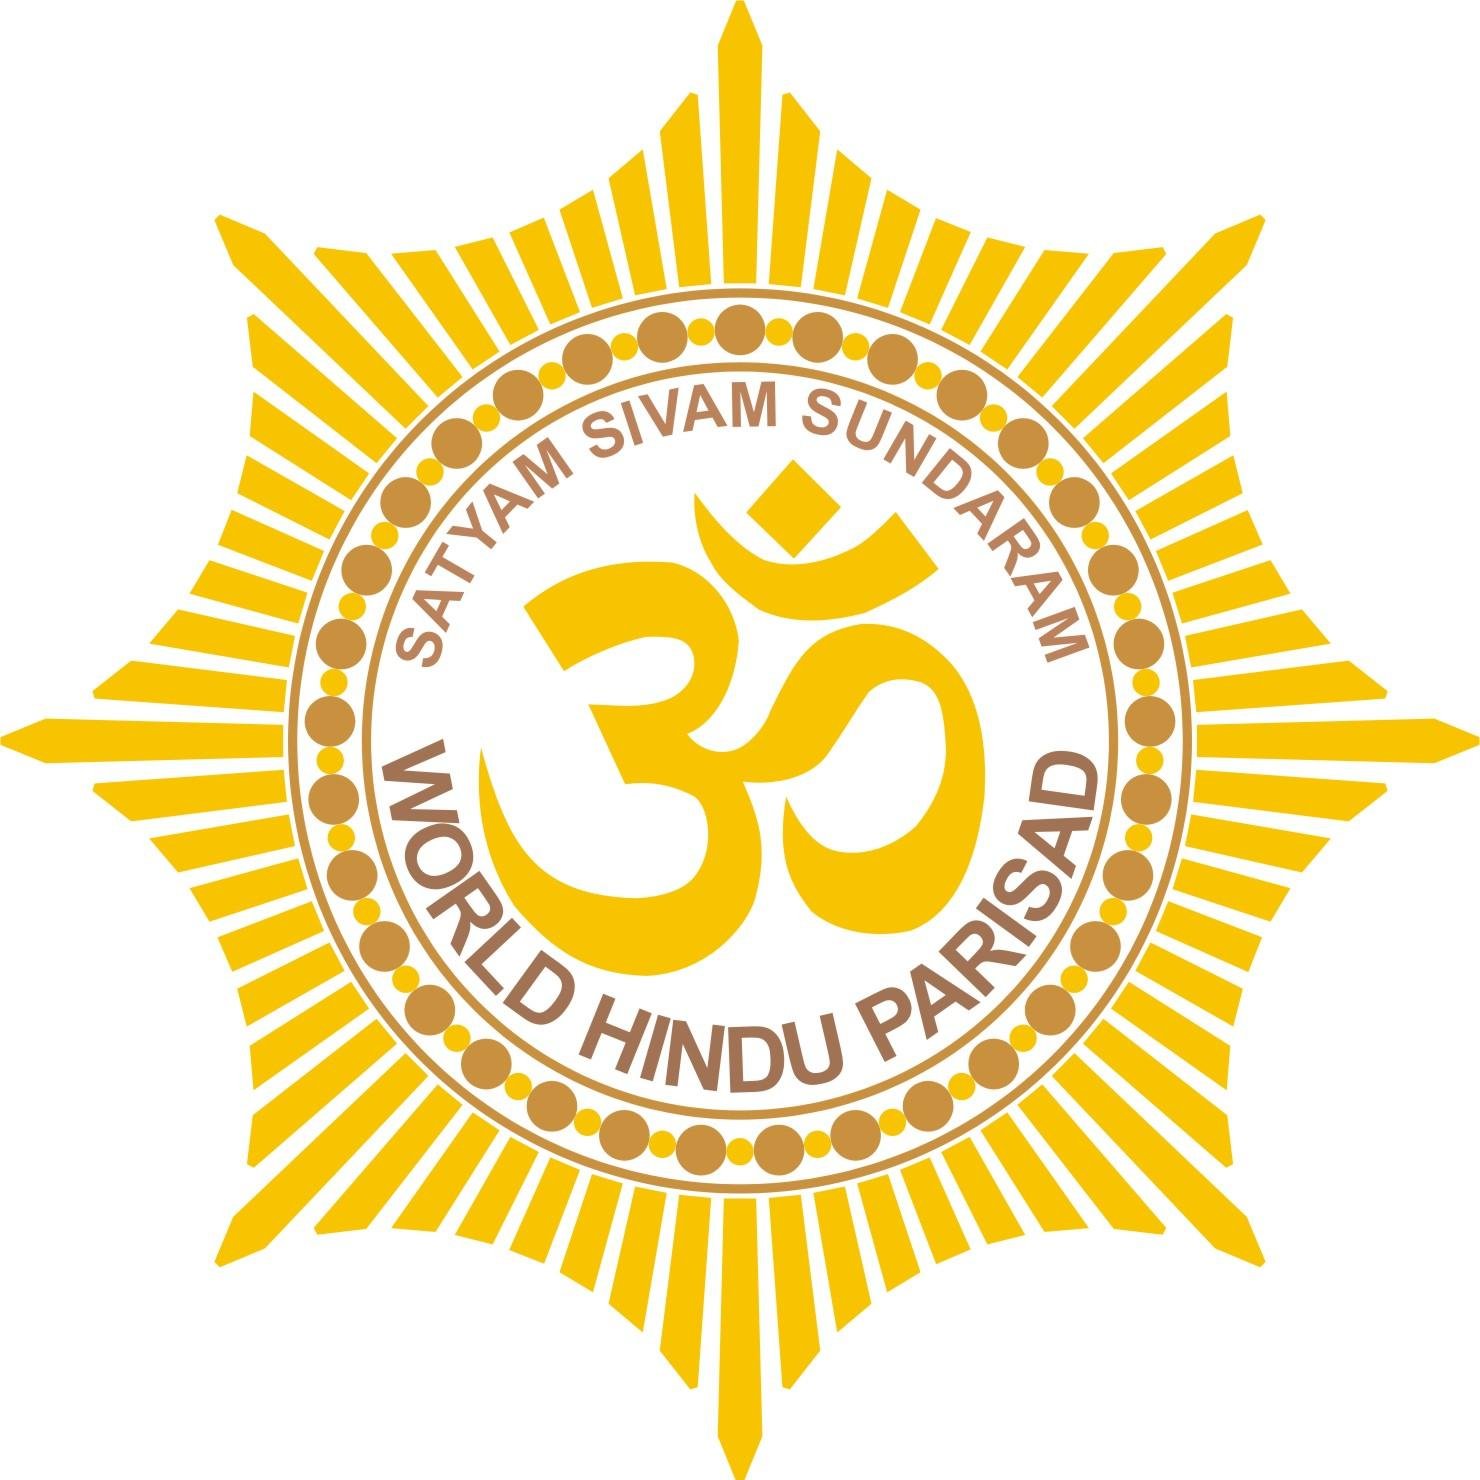 World Hindu Parisad